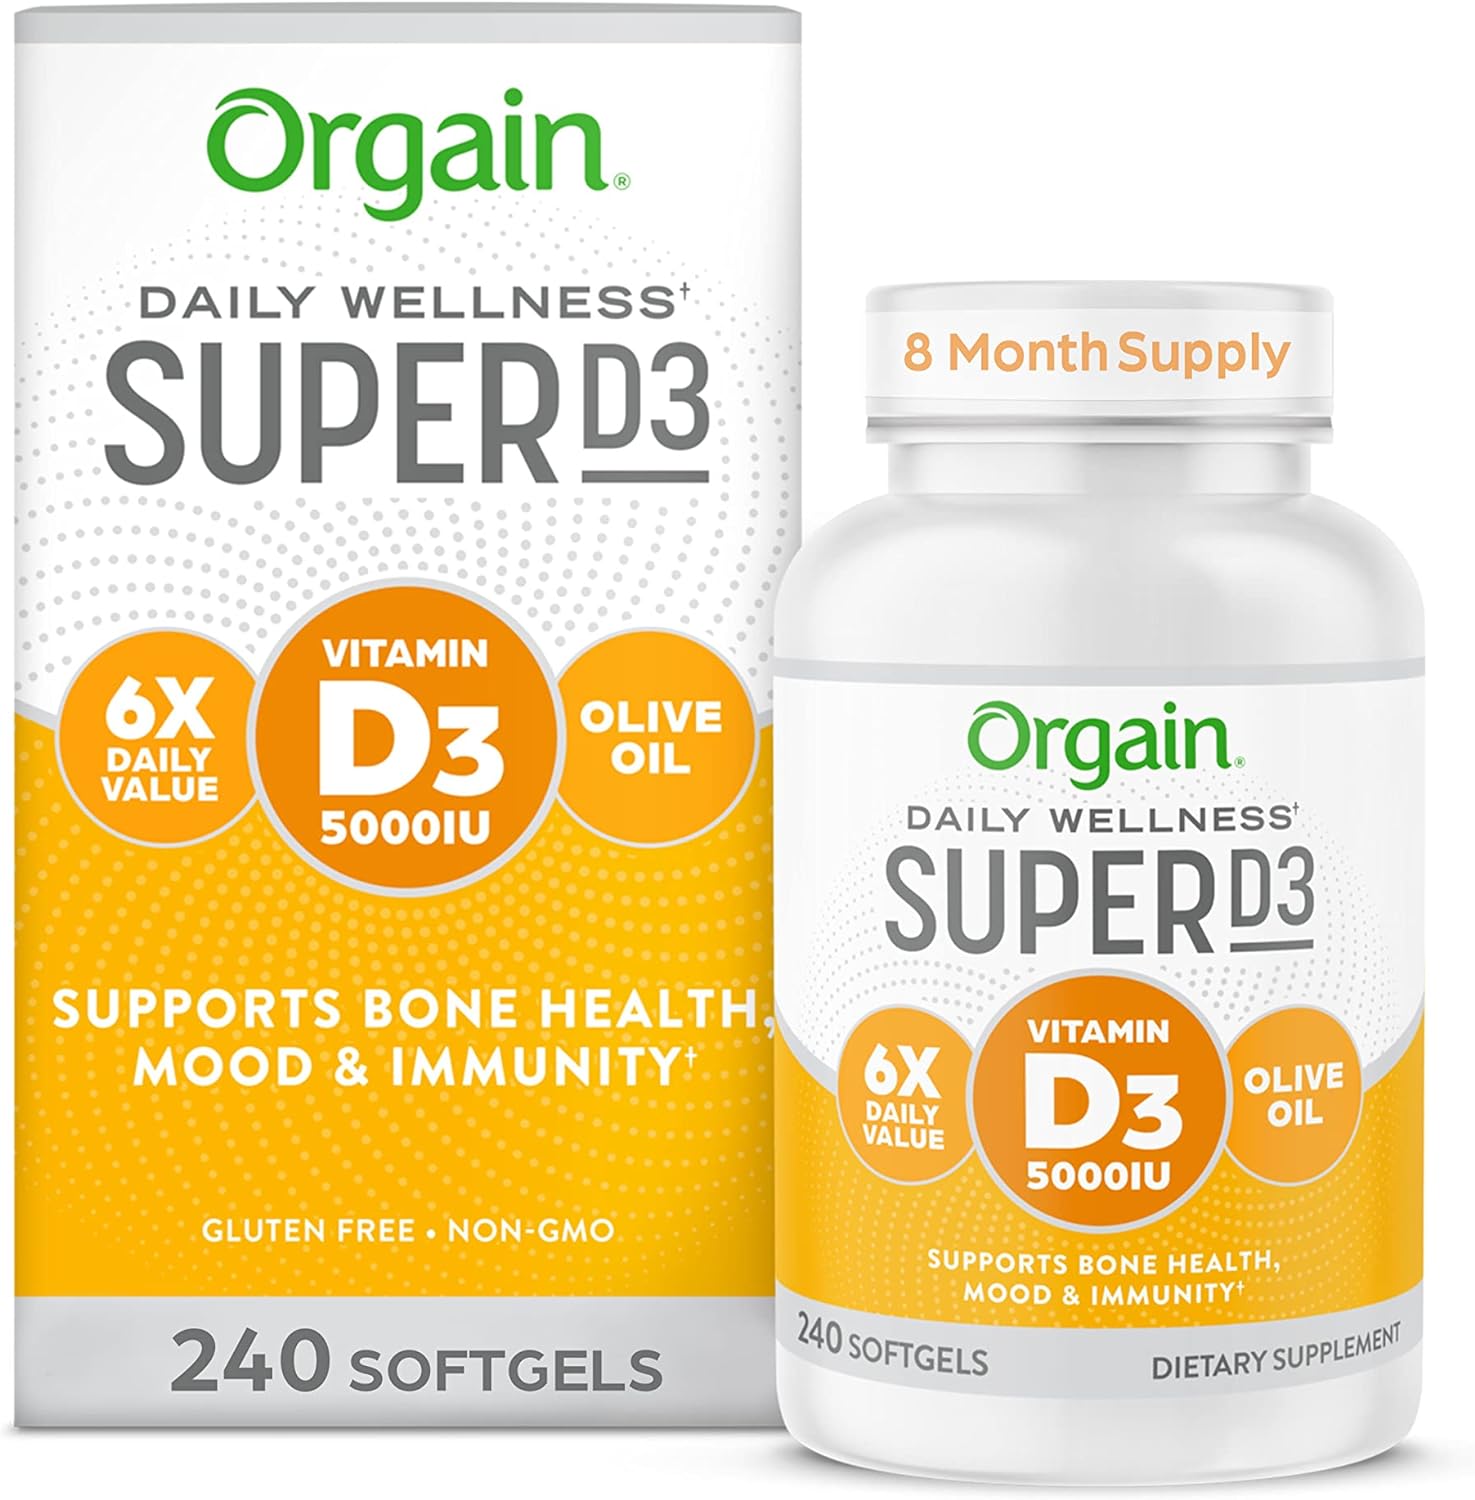 Vitamin D3 5,000IU (125mcg) for Immune Support, Bone Health, and Mood